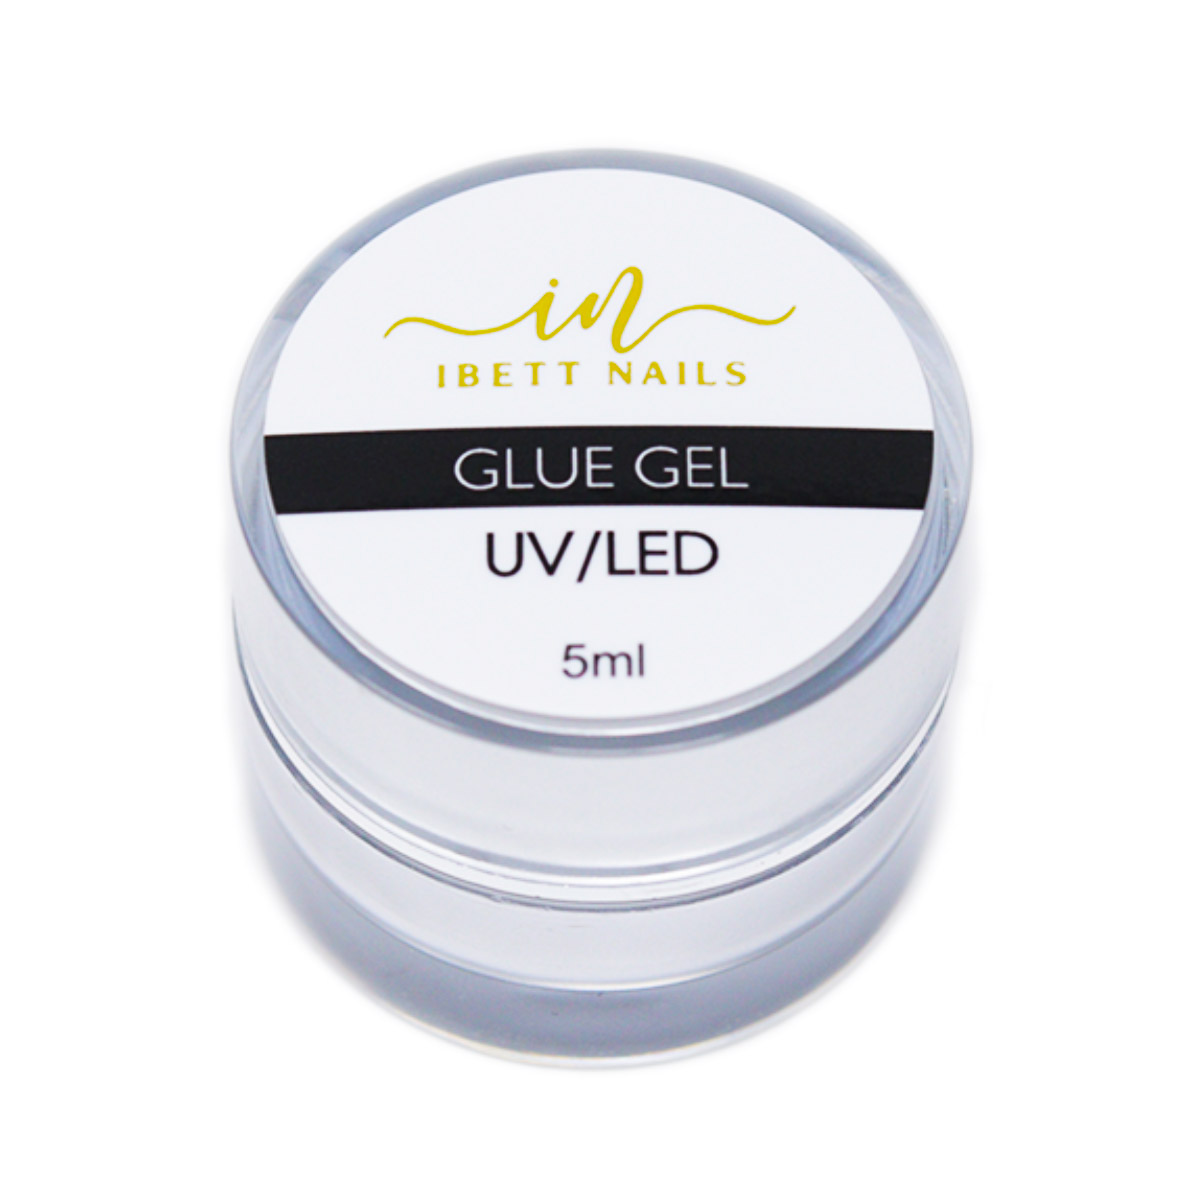 Ibett Nails - Glue Gel Suitable for medium or large rhinestones - zircons